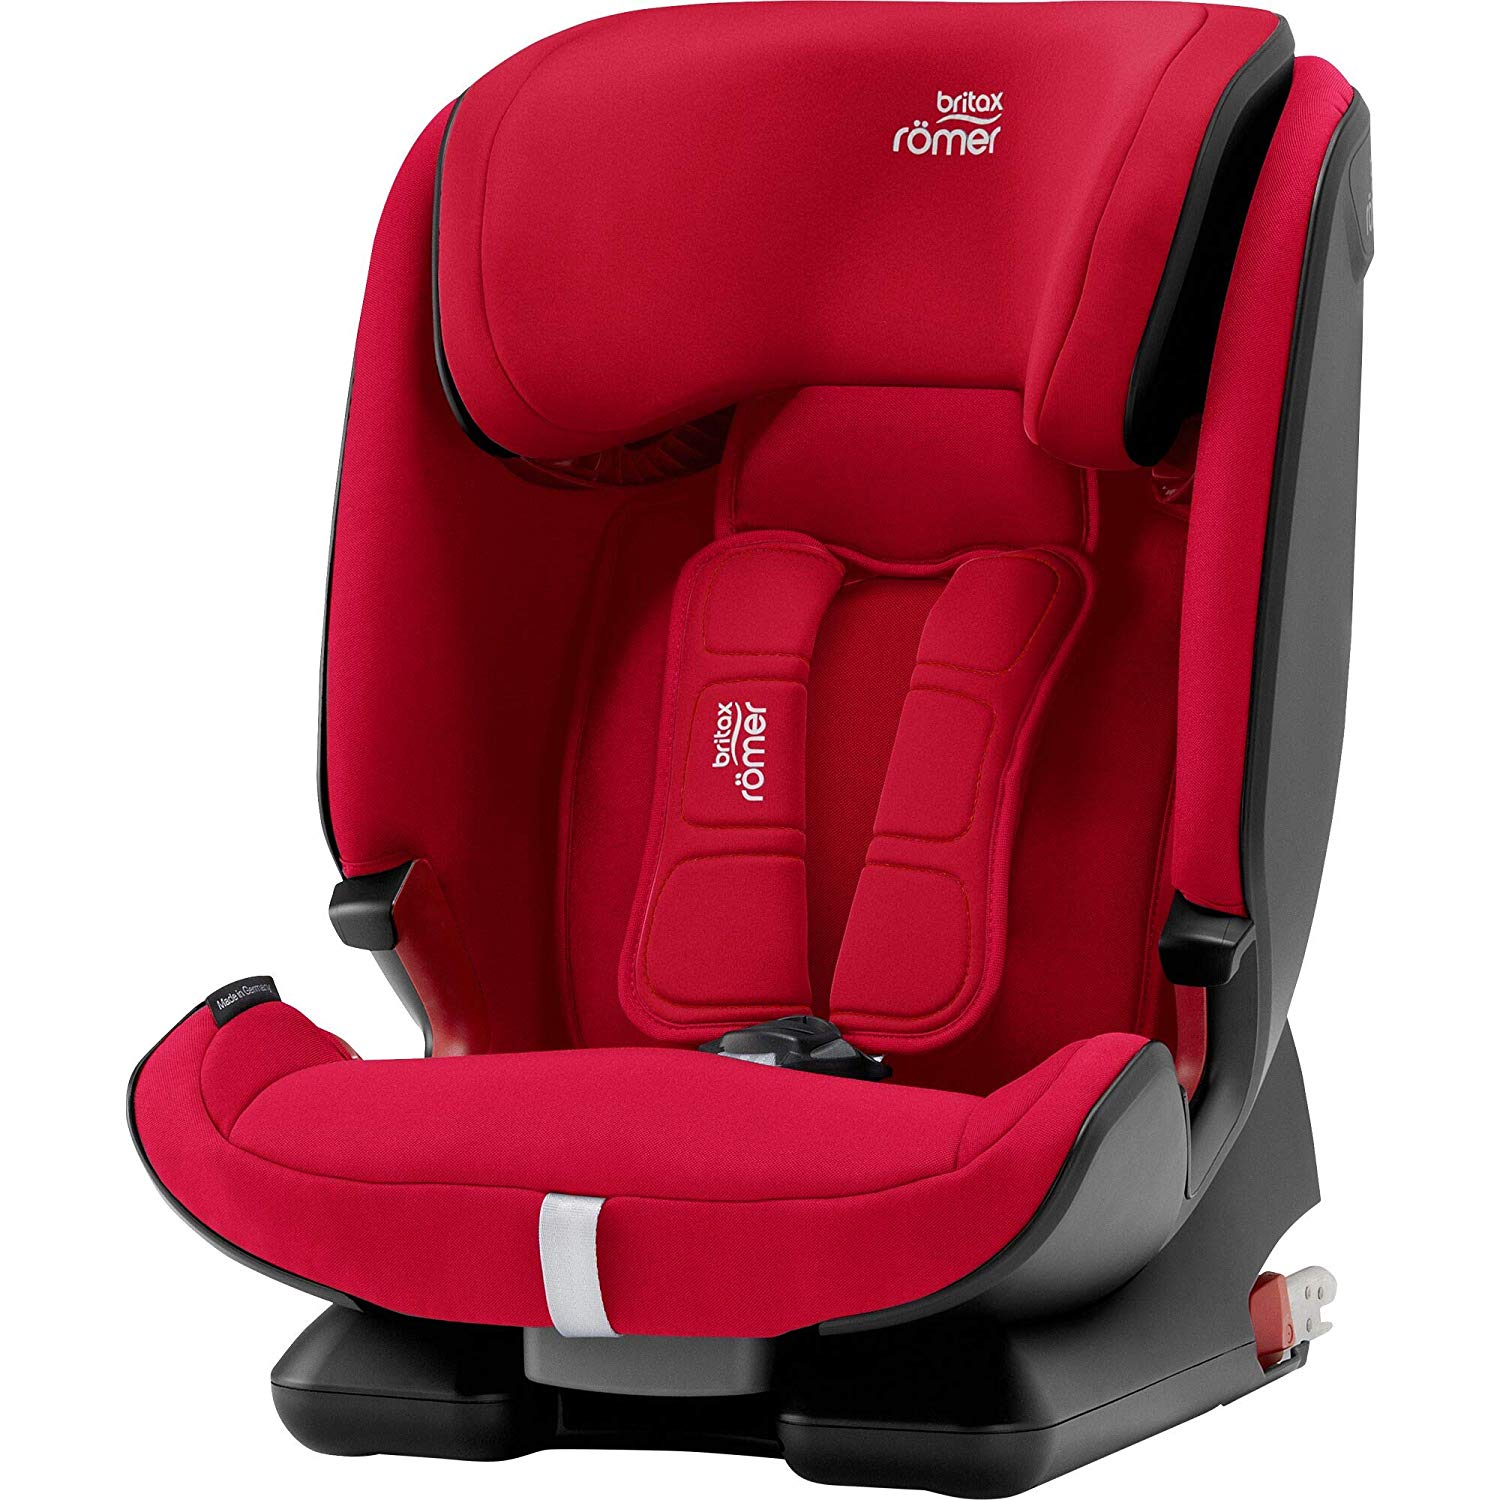 Britax Römer Child Car Seat Fire Red